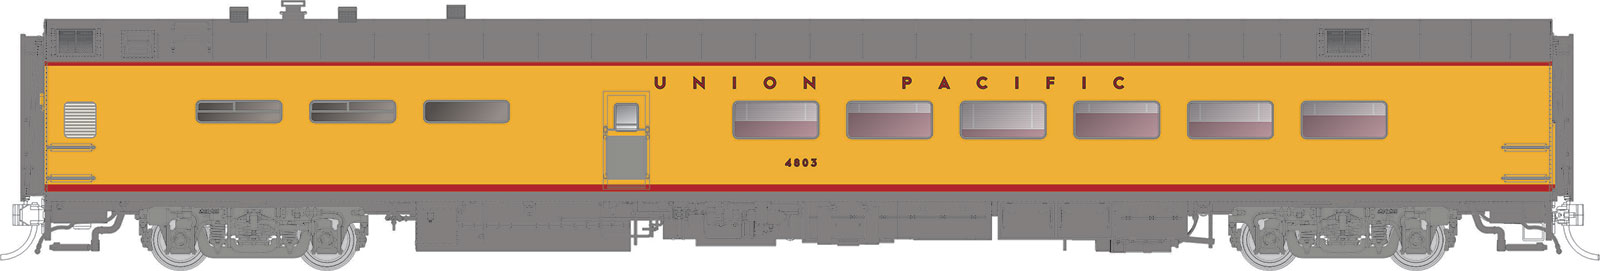  Union Pacific

 